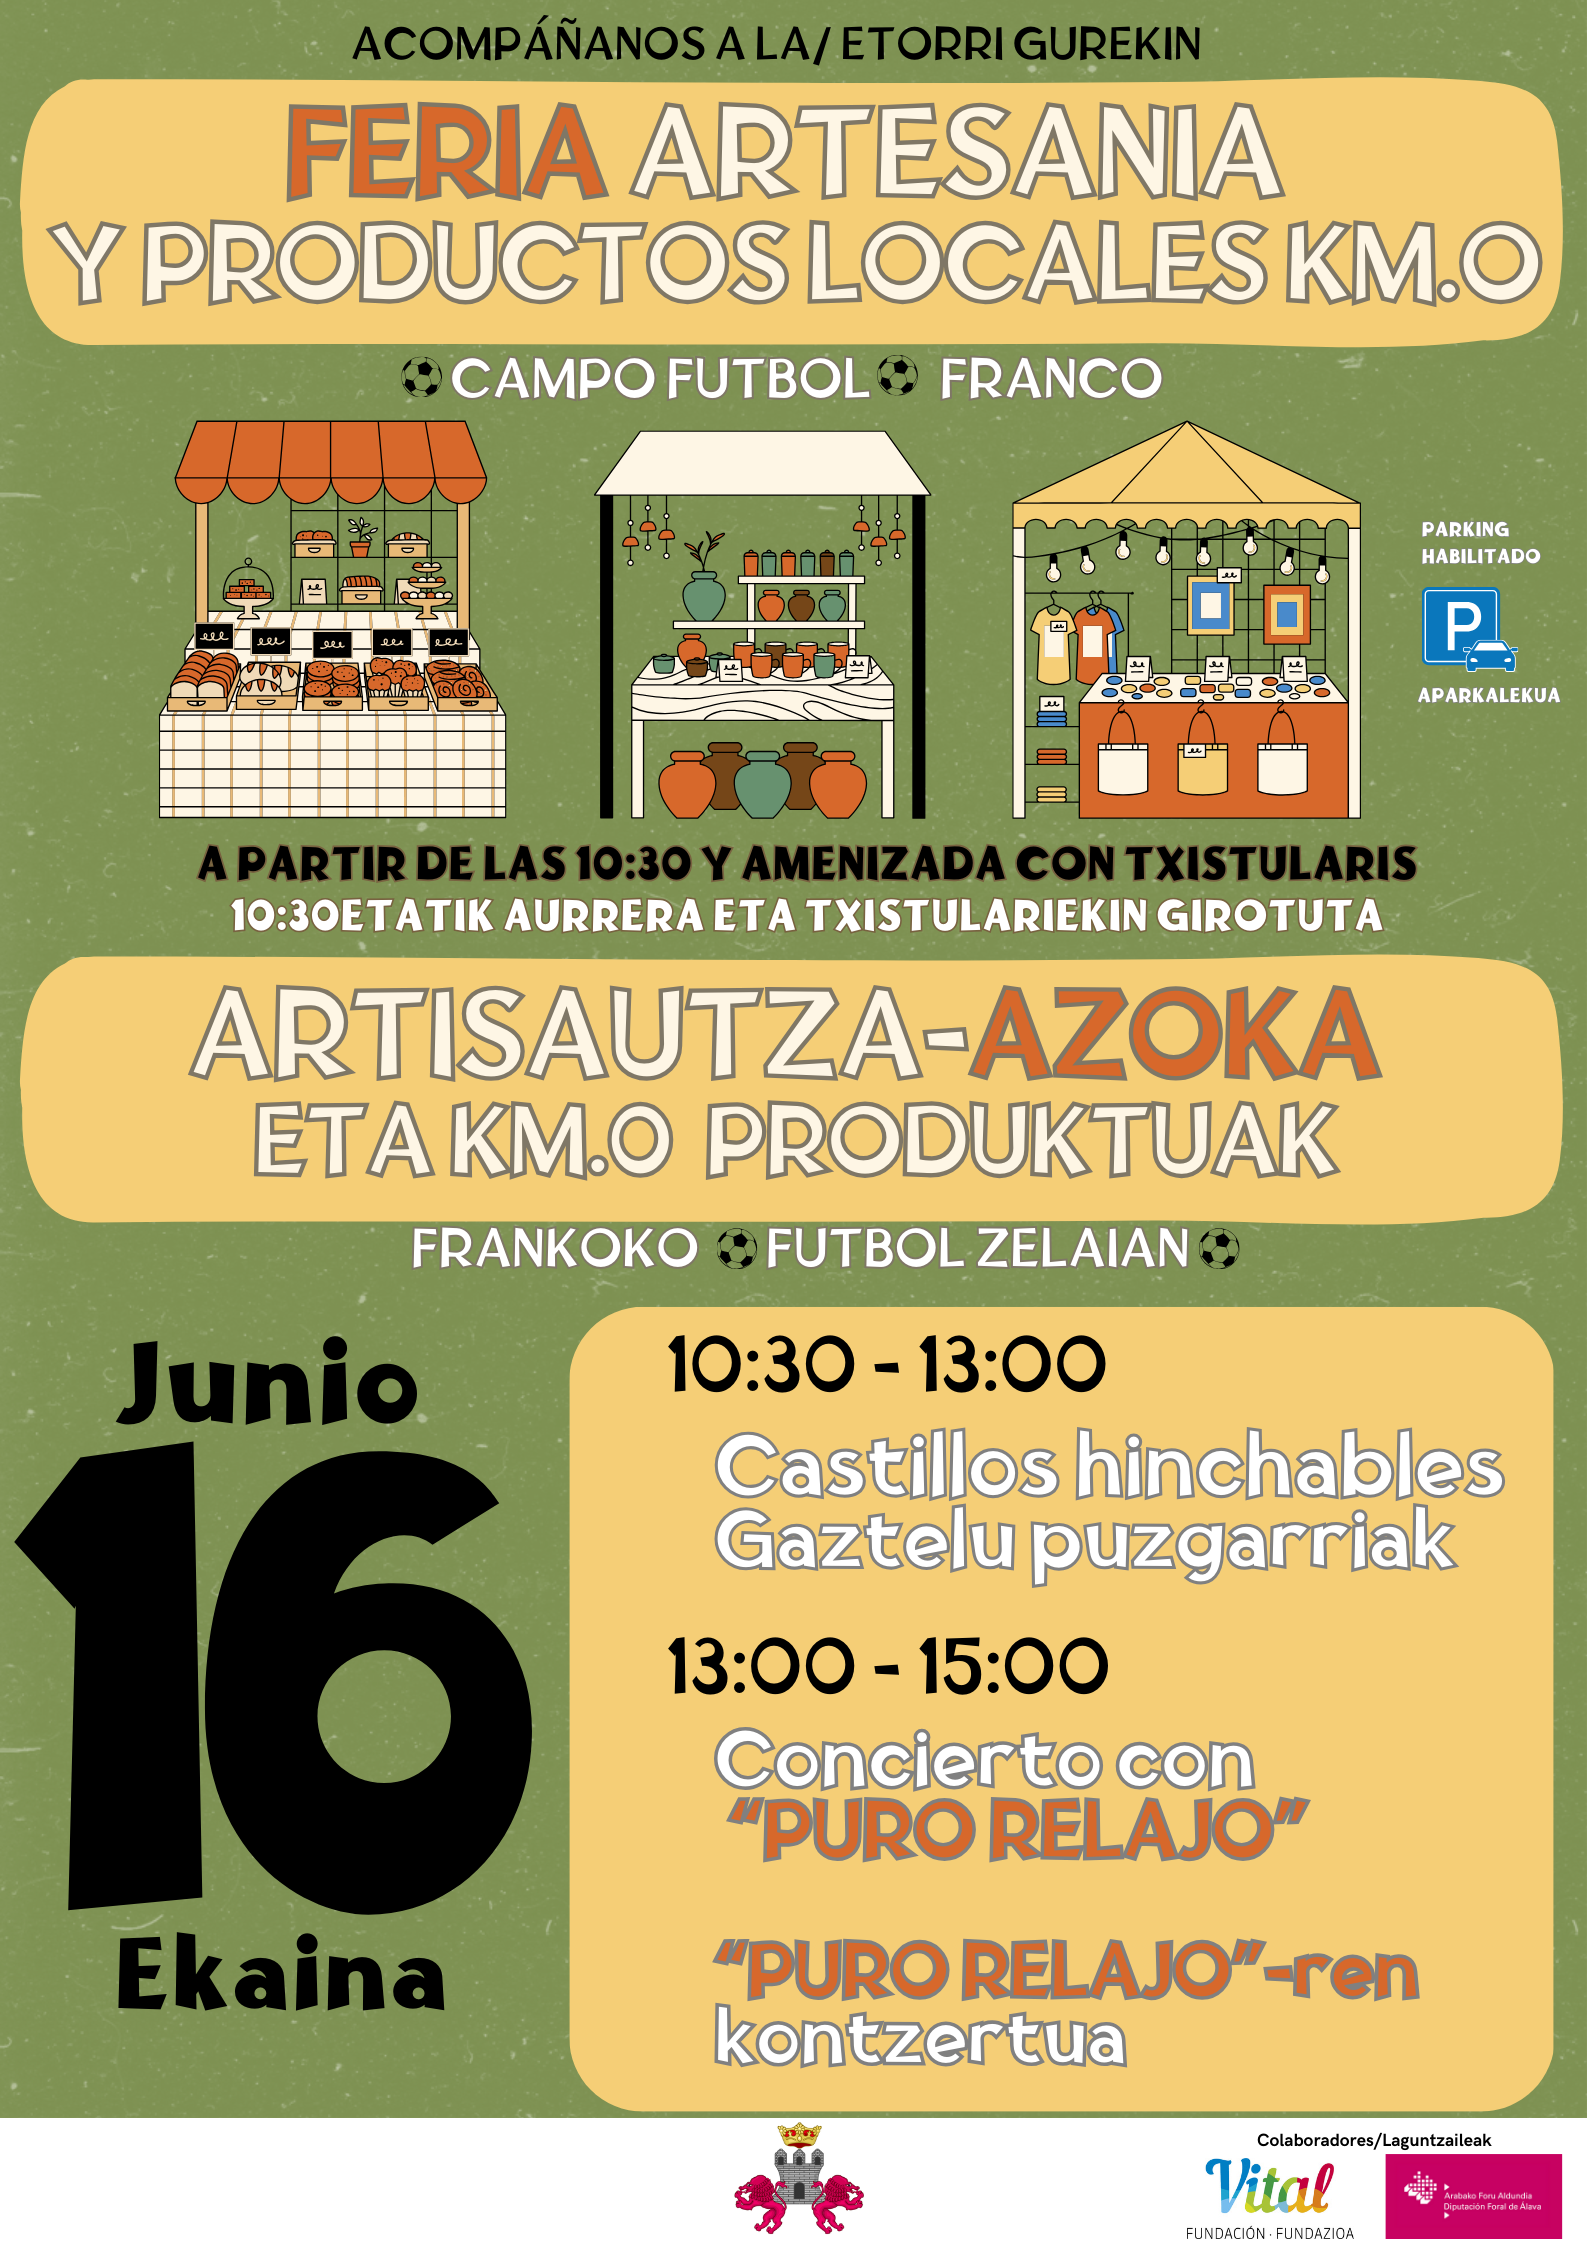 Feria de Artesanía y Concierto de "Puro Relajo" domingo 16 de junio/Ekainaren 16an, igandea, Artisau Azoka eta "Puro Relajo" taldearen Kontzertua